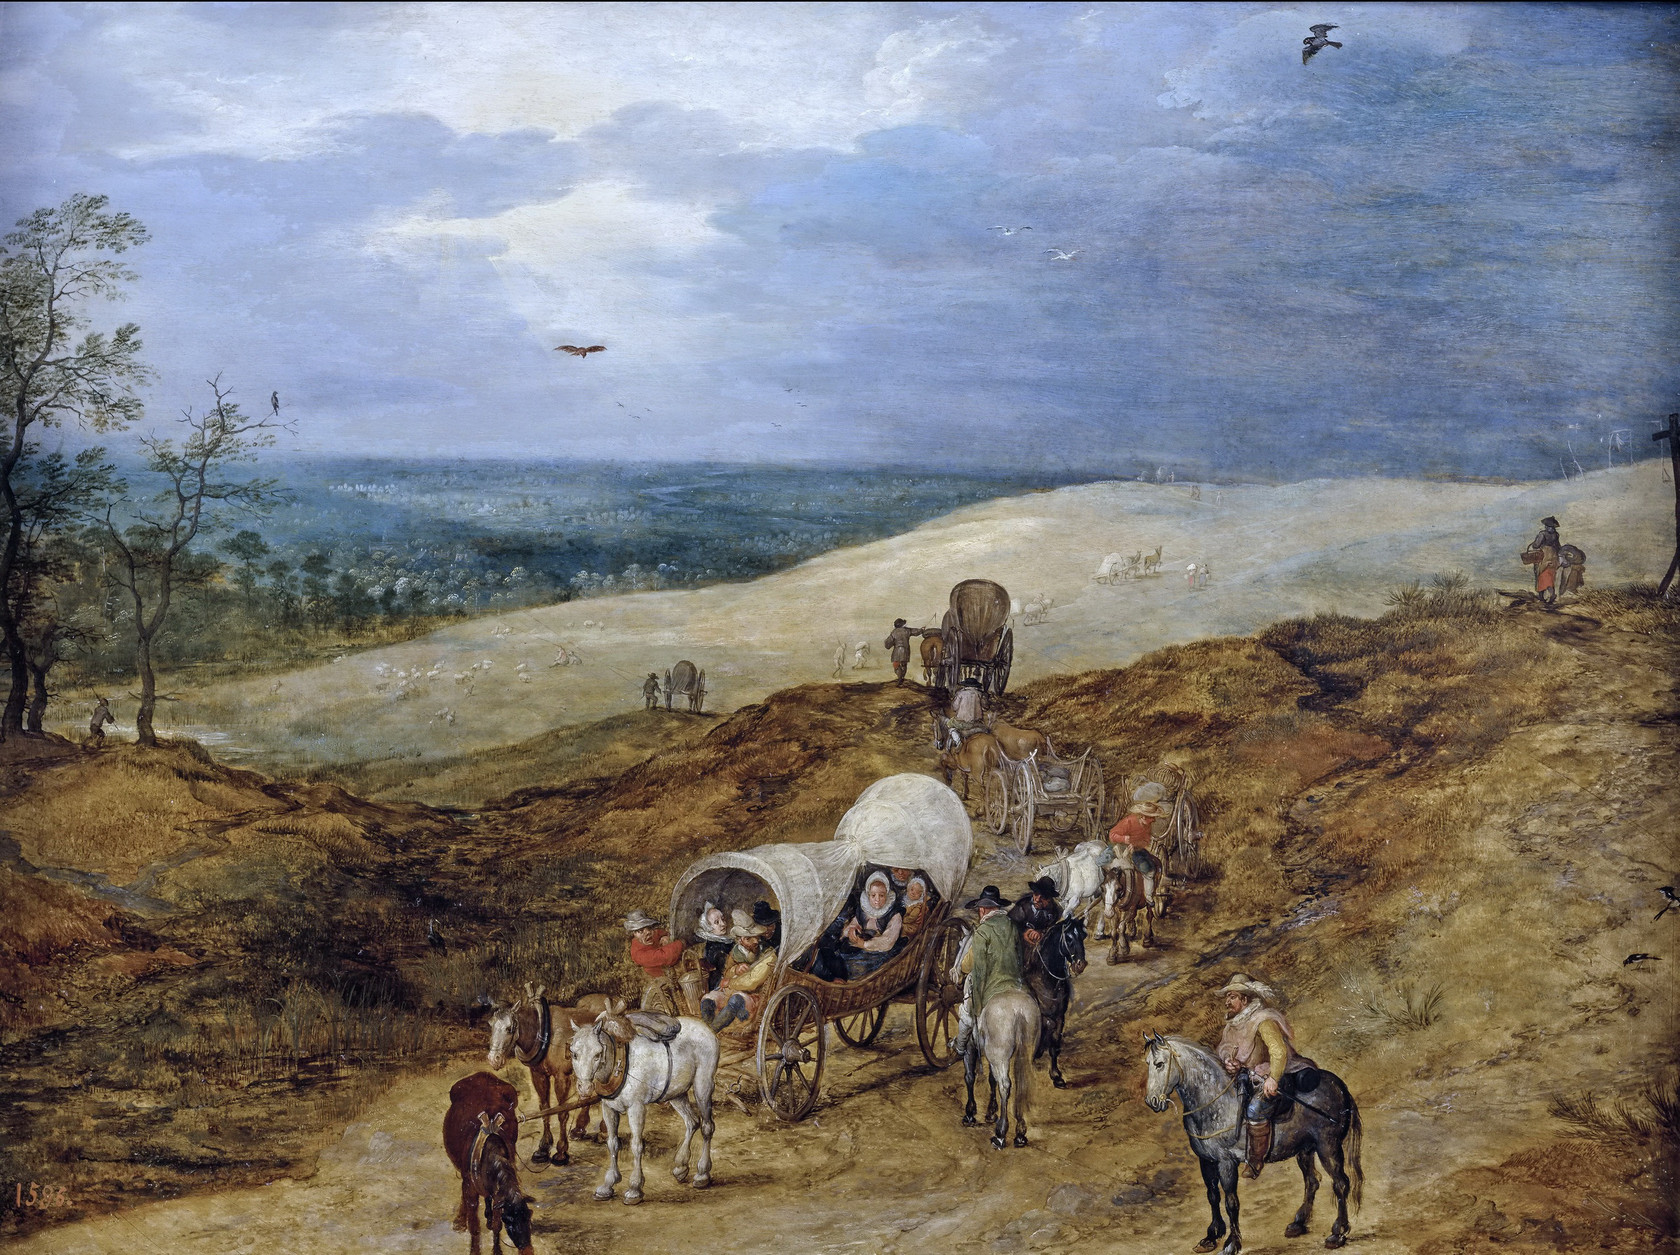 Картина Пейзаж с путниками, 1603 - Музей Прадо